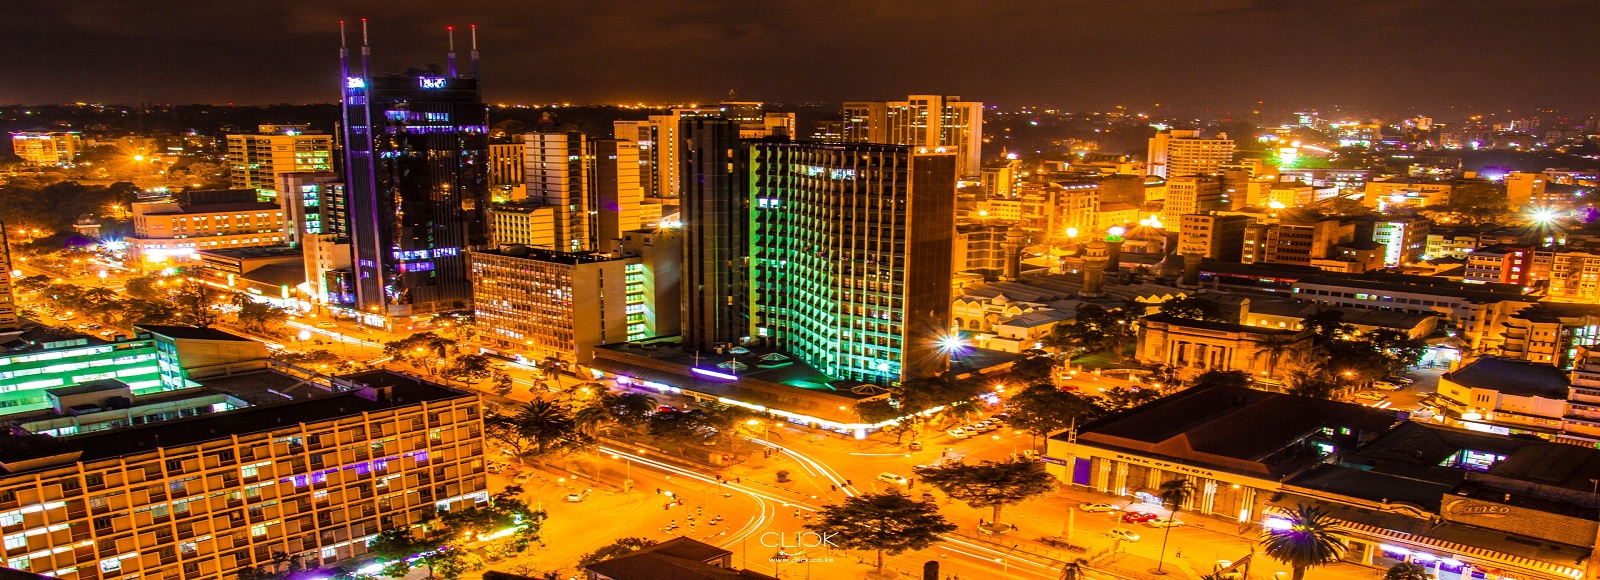 Transfer Offers in Nairobi. Low Cost Transfers in  Nairobi 